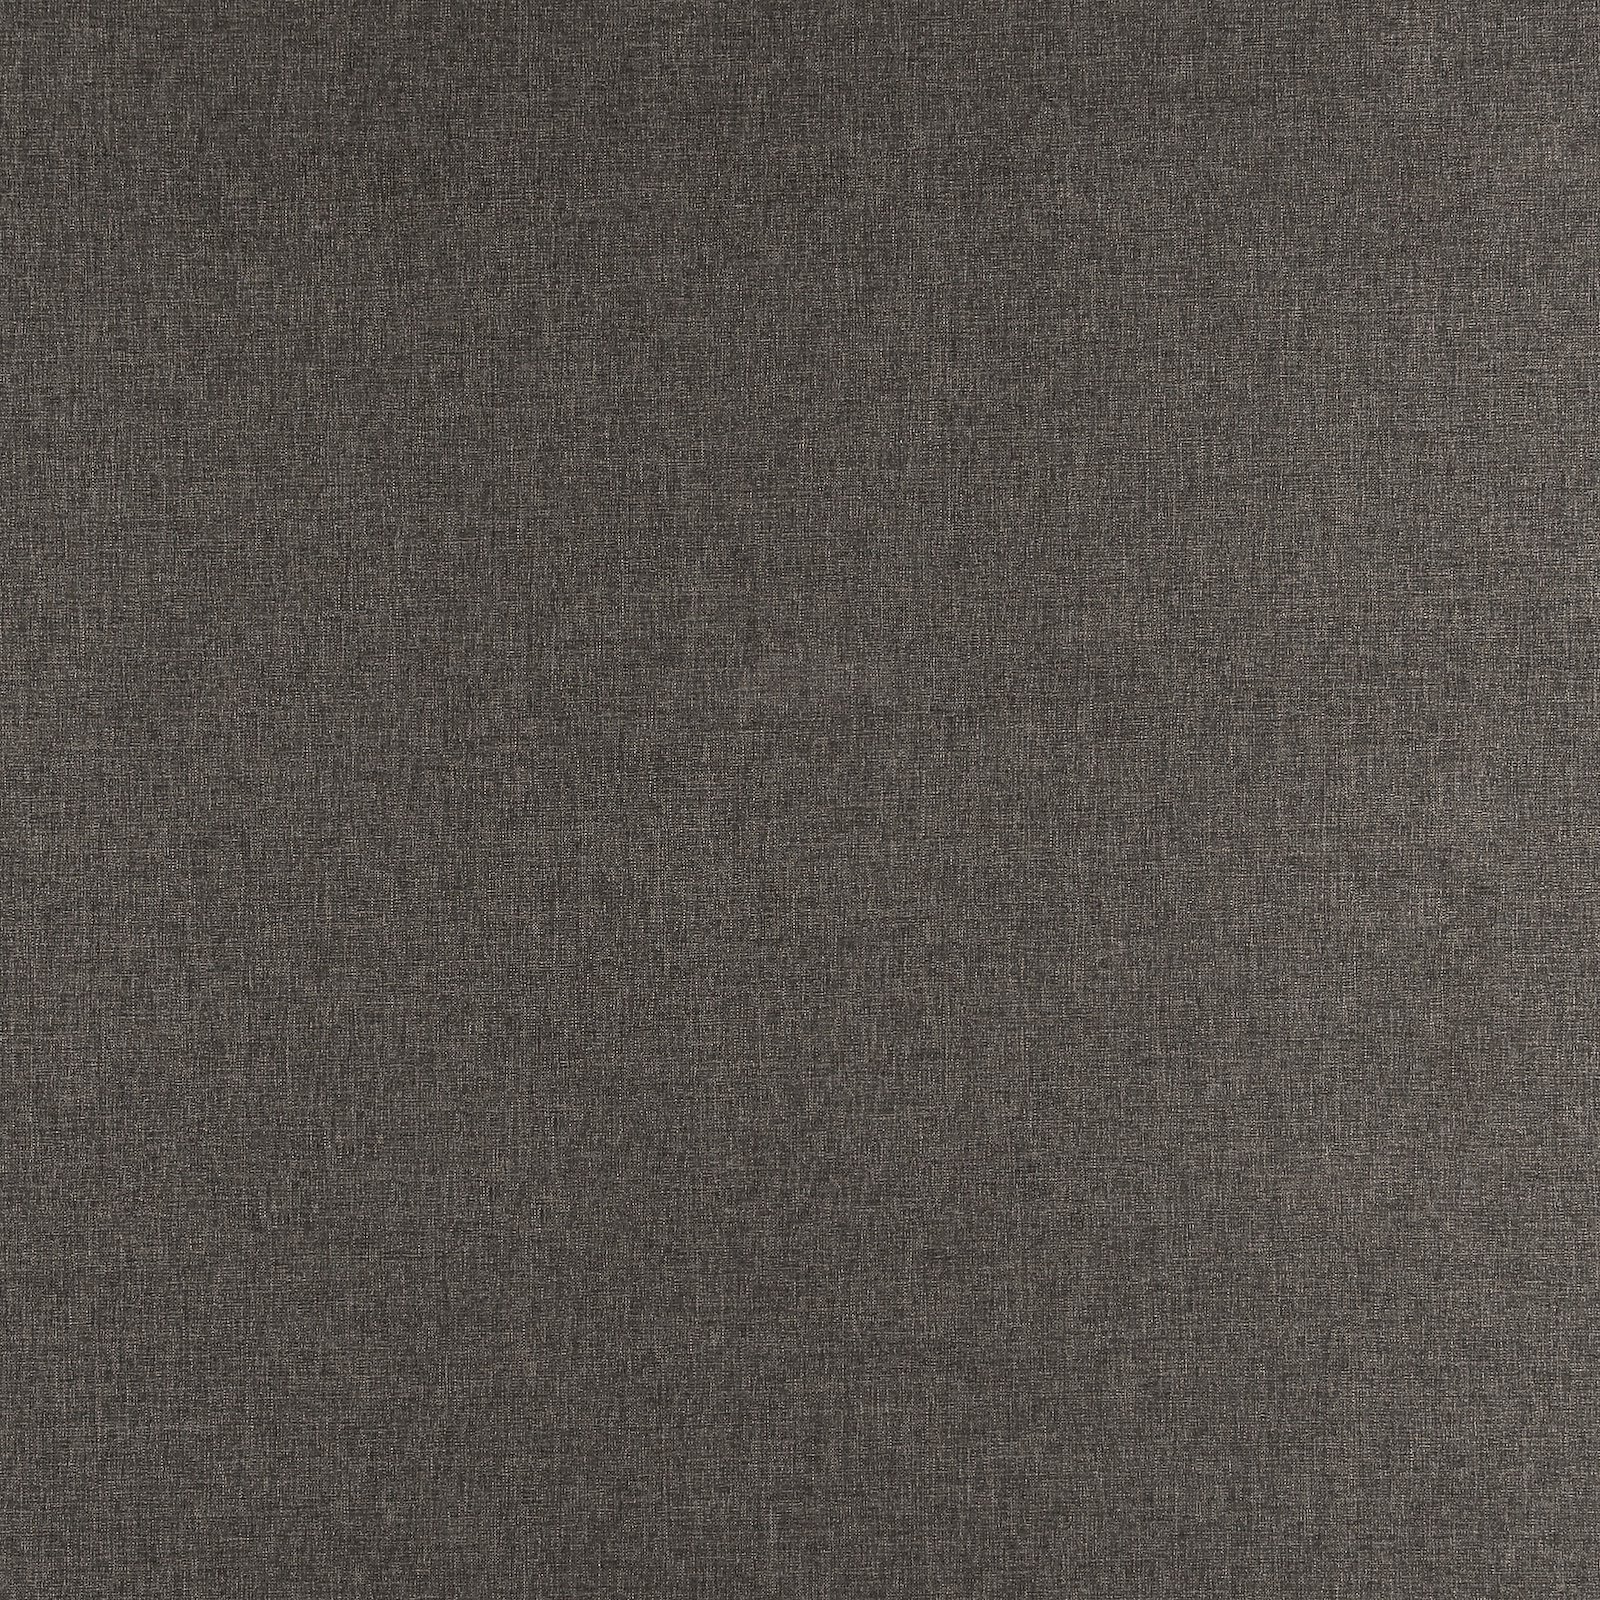 Upholstery texture dark grey/black 822161_pack_solid